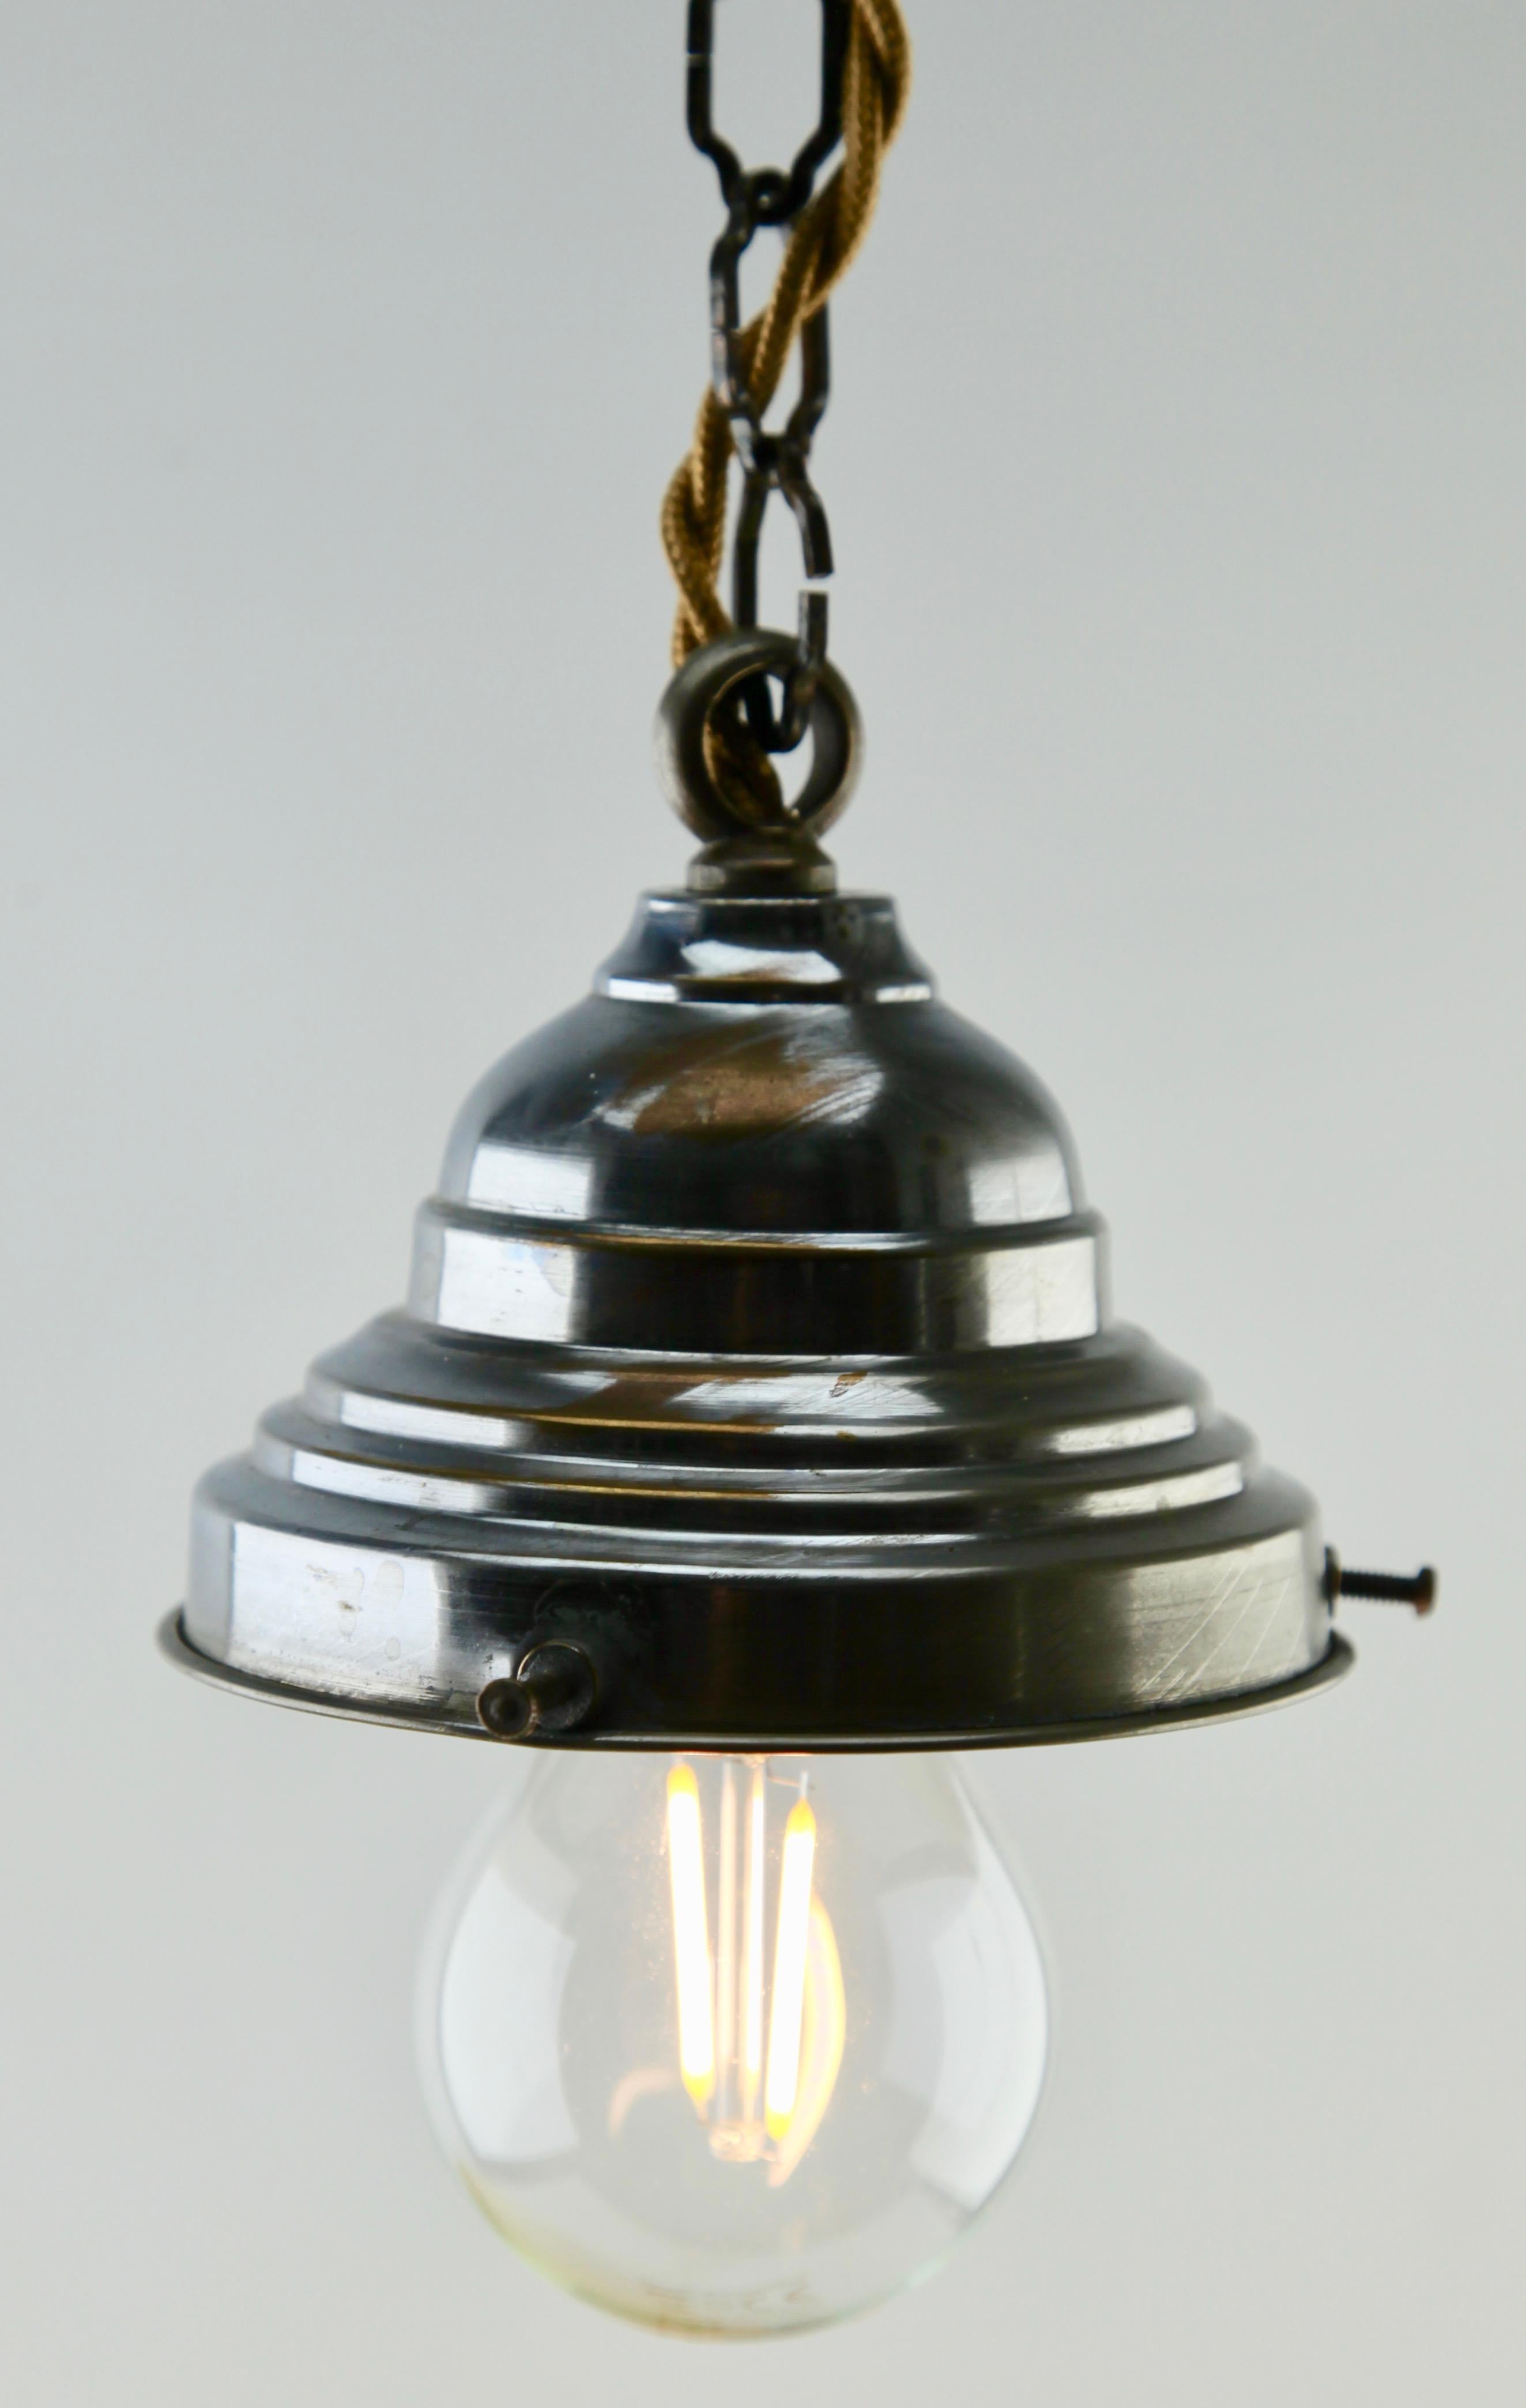 Art Glass Art Deco Ceiling Lamp, Scailmont Belgium Glass Shade, 1930s For Sale